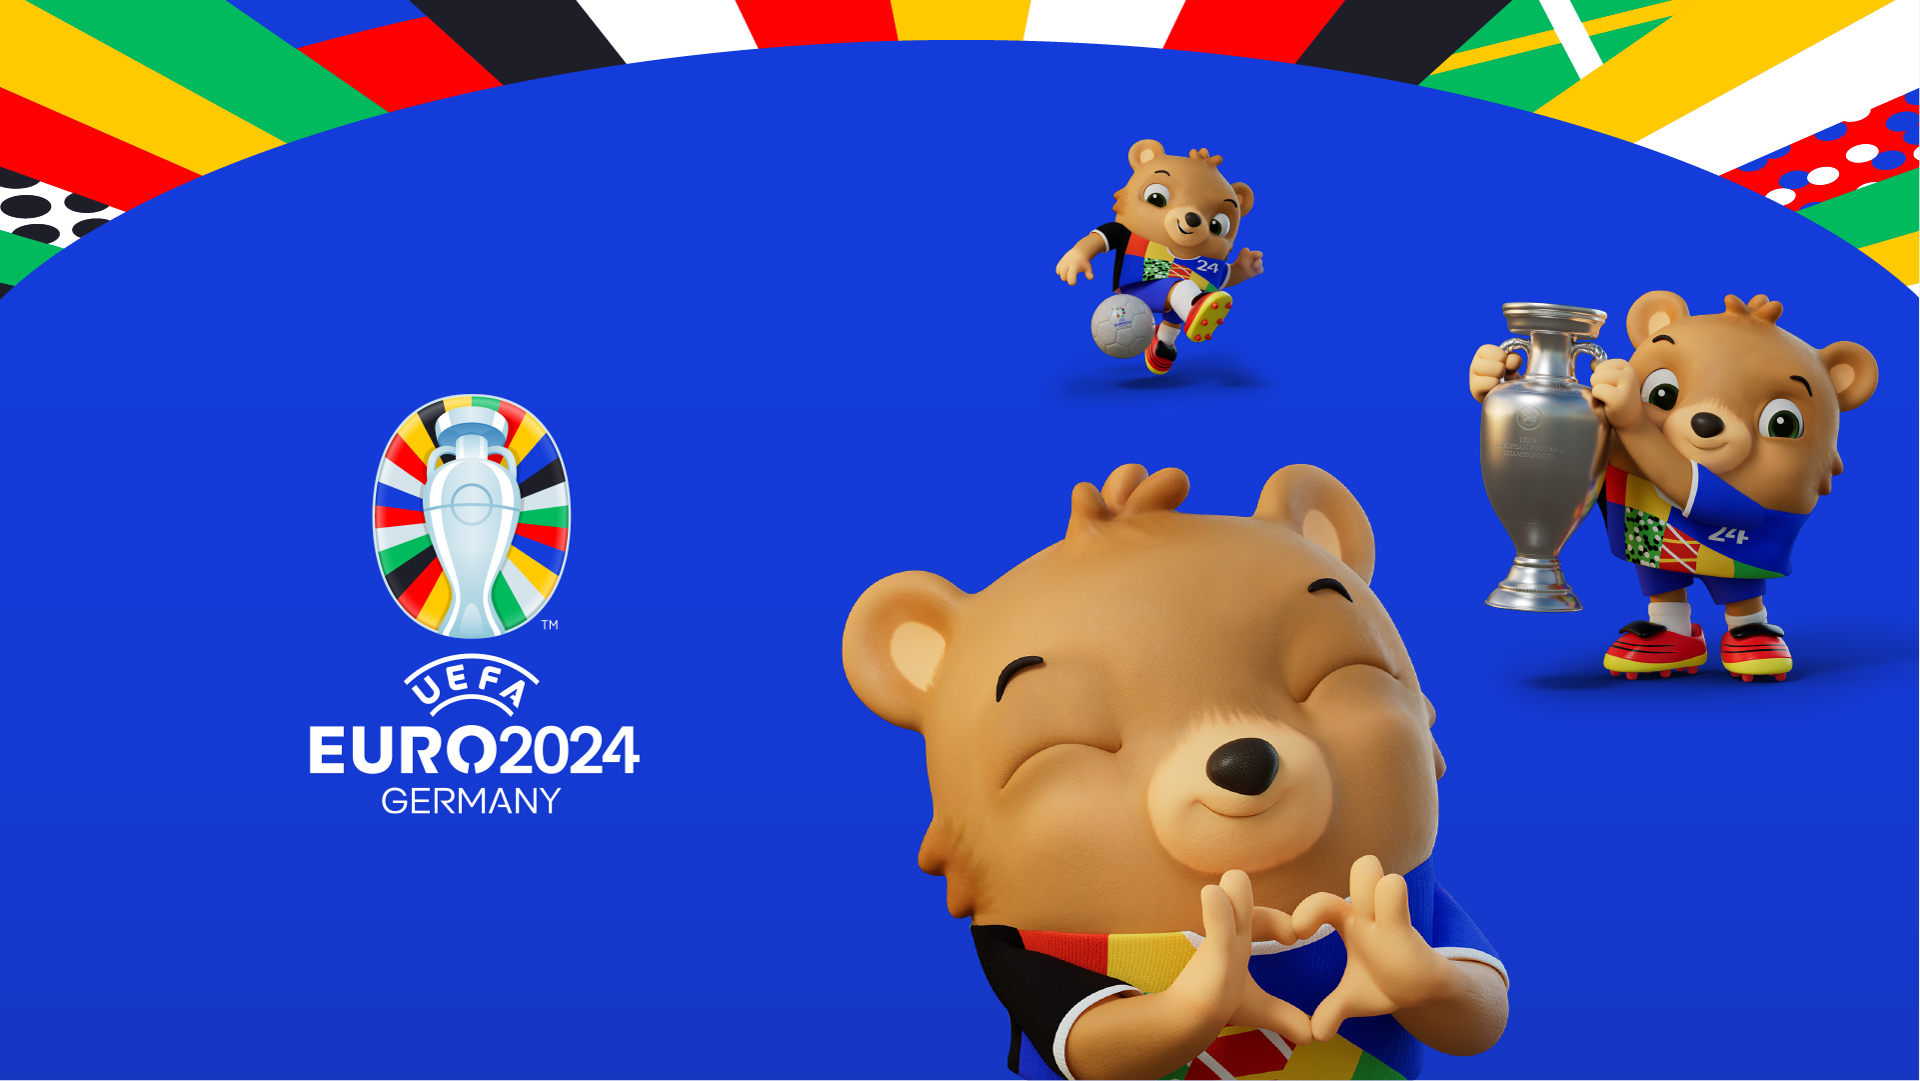 Vote and help us name the EURO 2024 mascot! UEFA EURO 2024